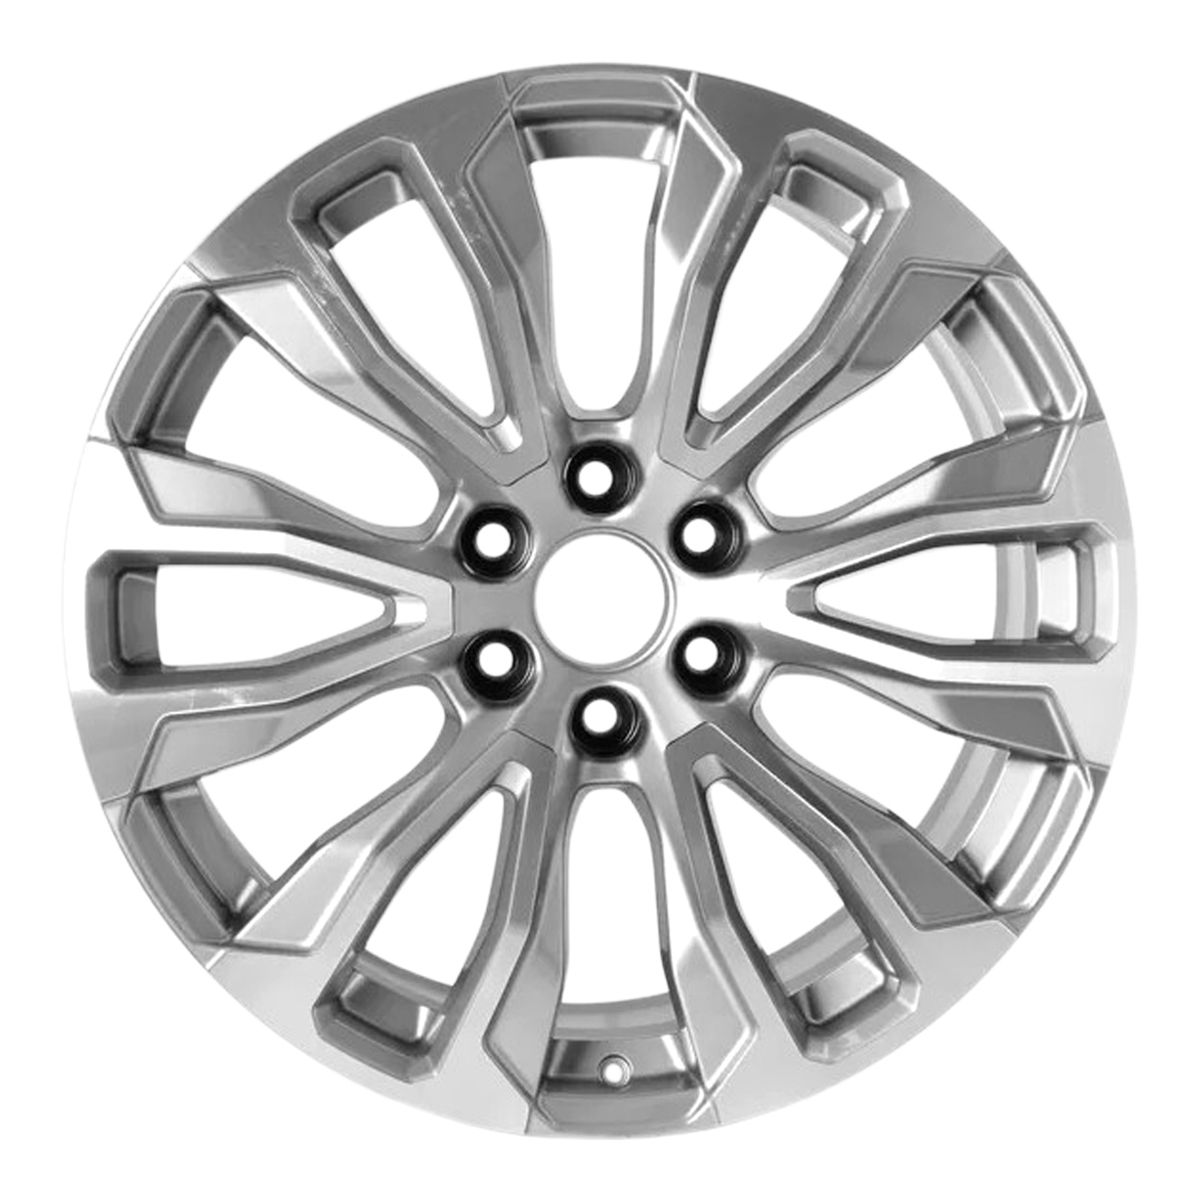 2021 GMC Yukon XL New 22" Replacement Wheel Rim RW14025MS